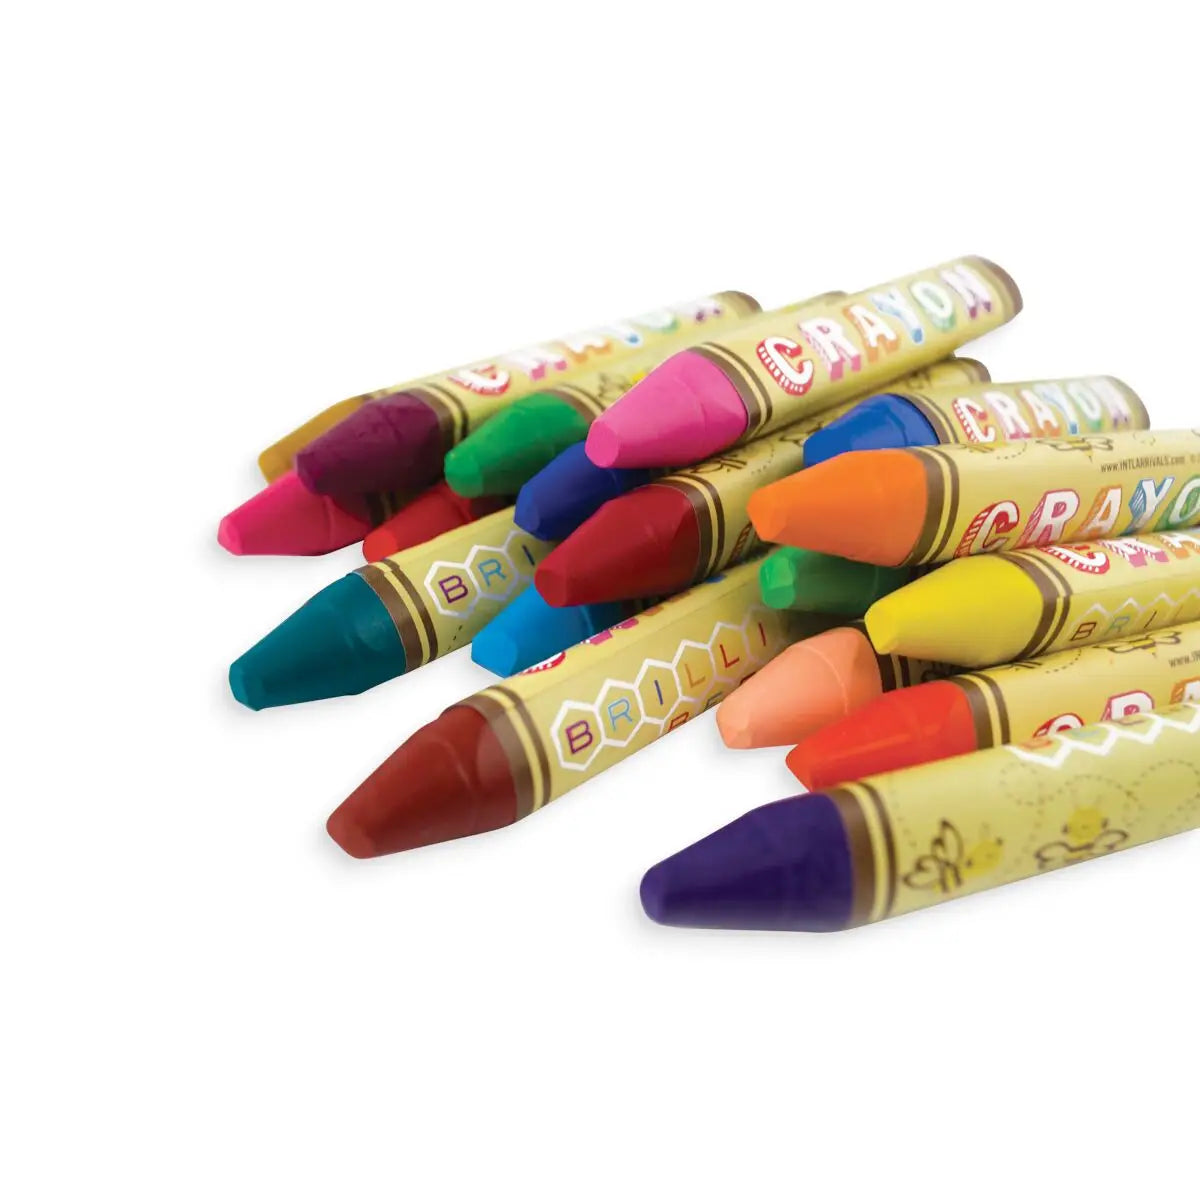 Brilliant Beeswax Crayons